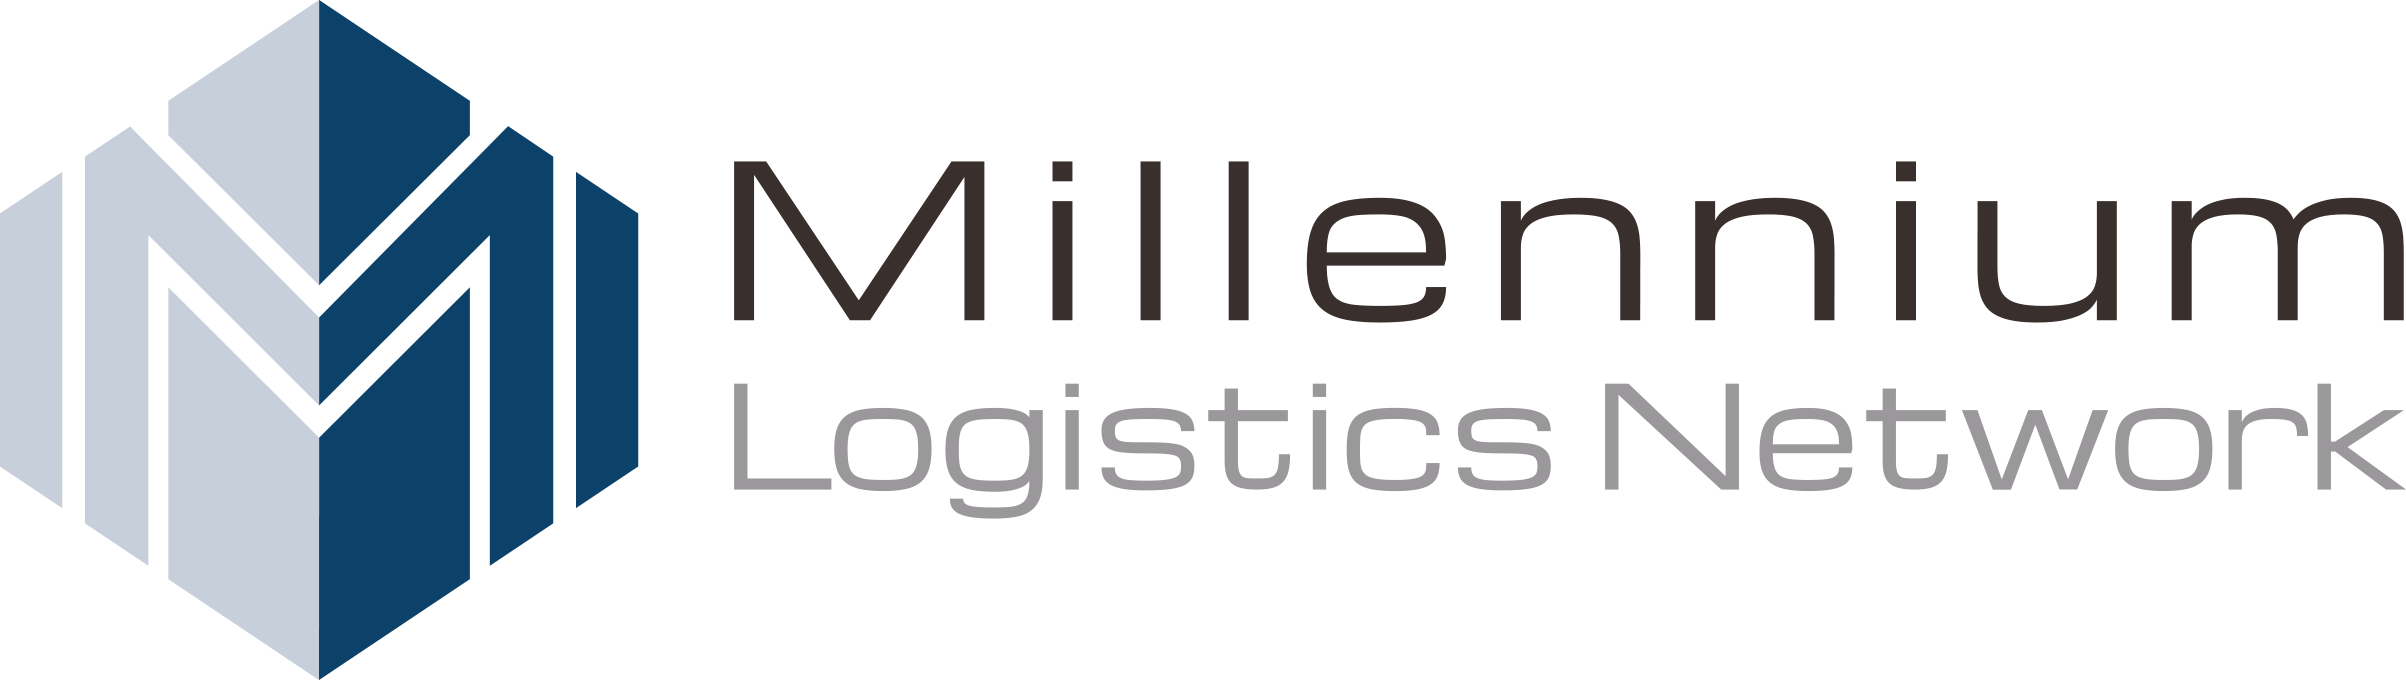 Millennium Logistics Network